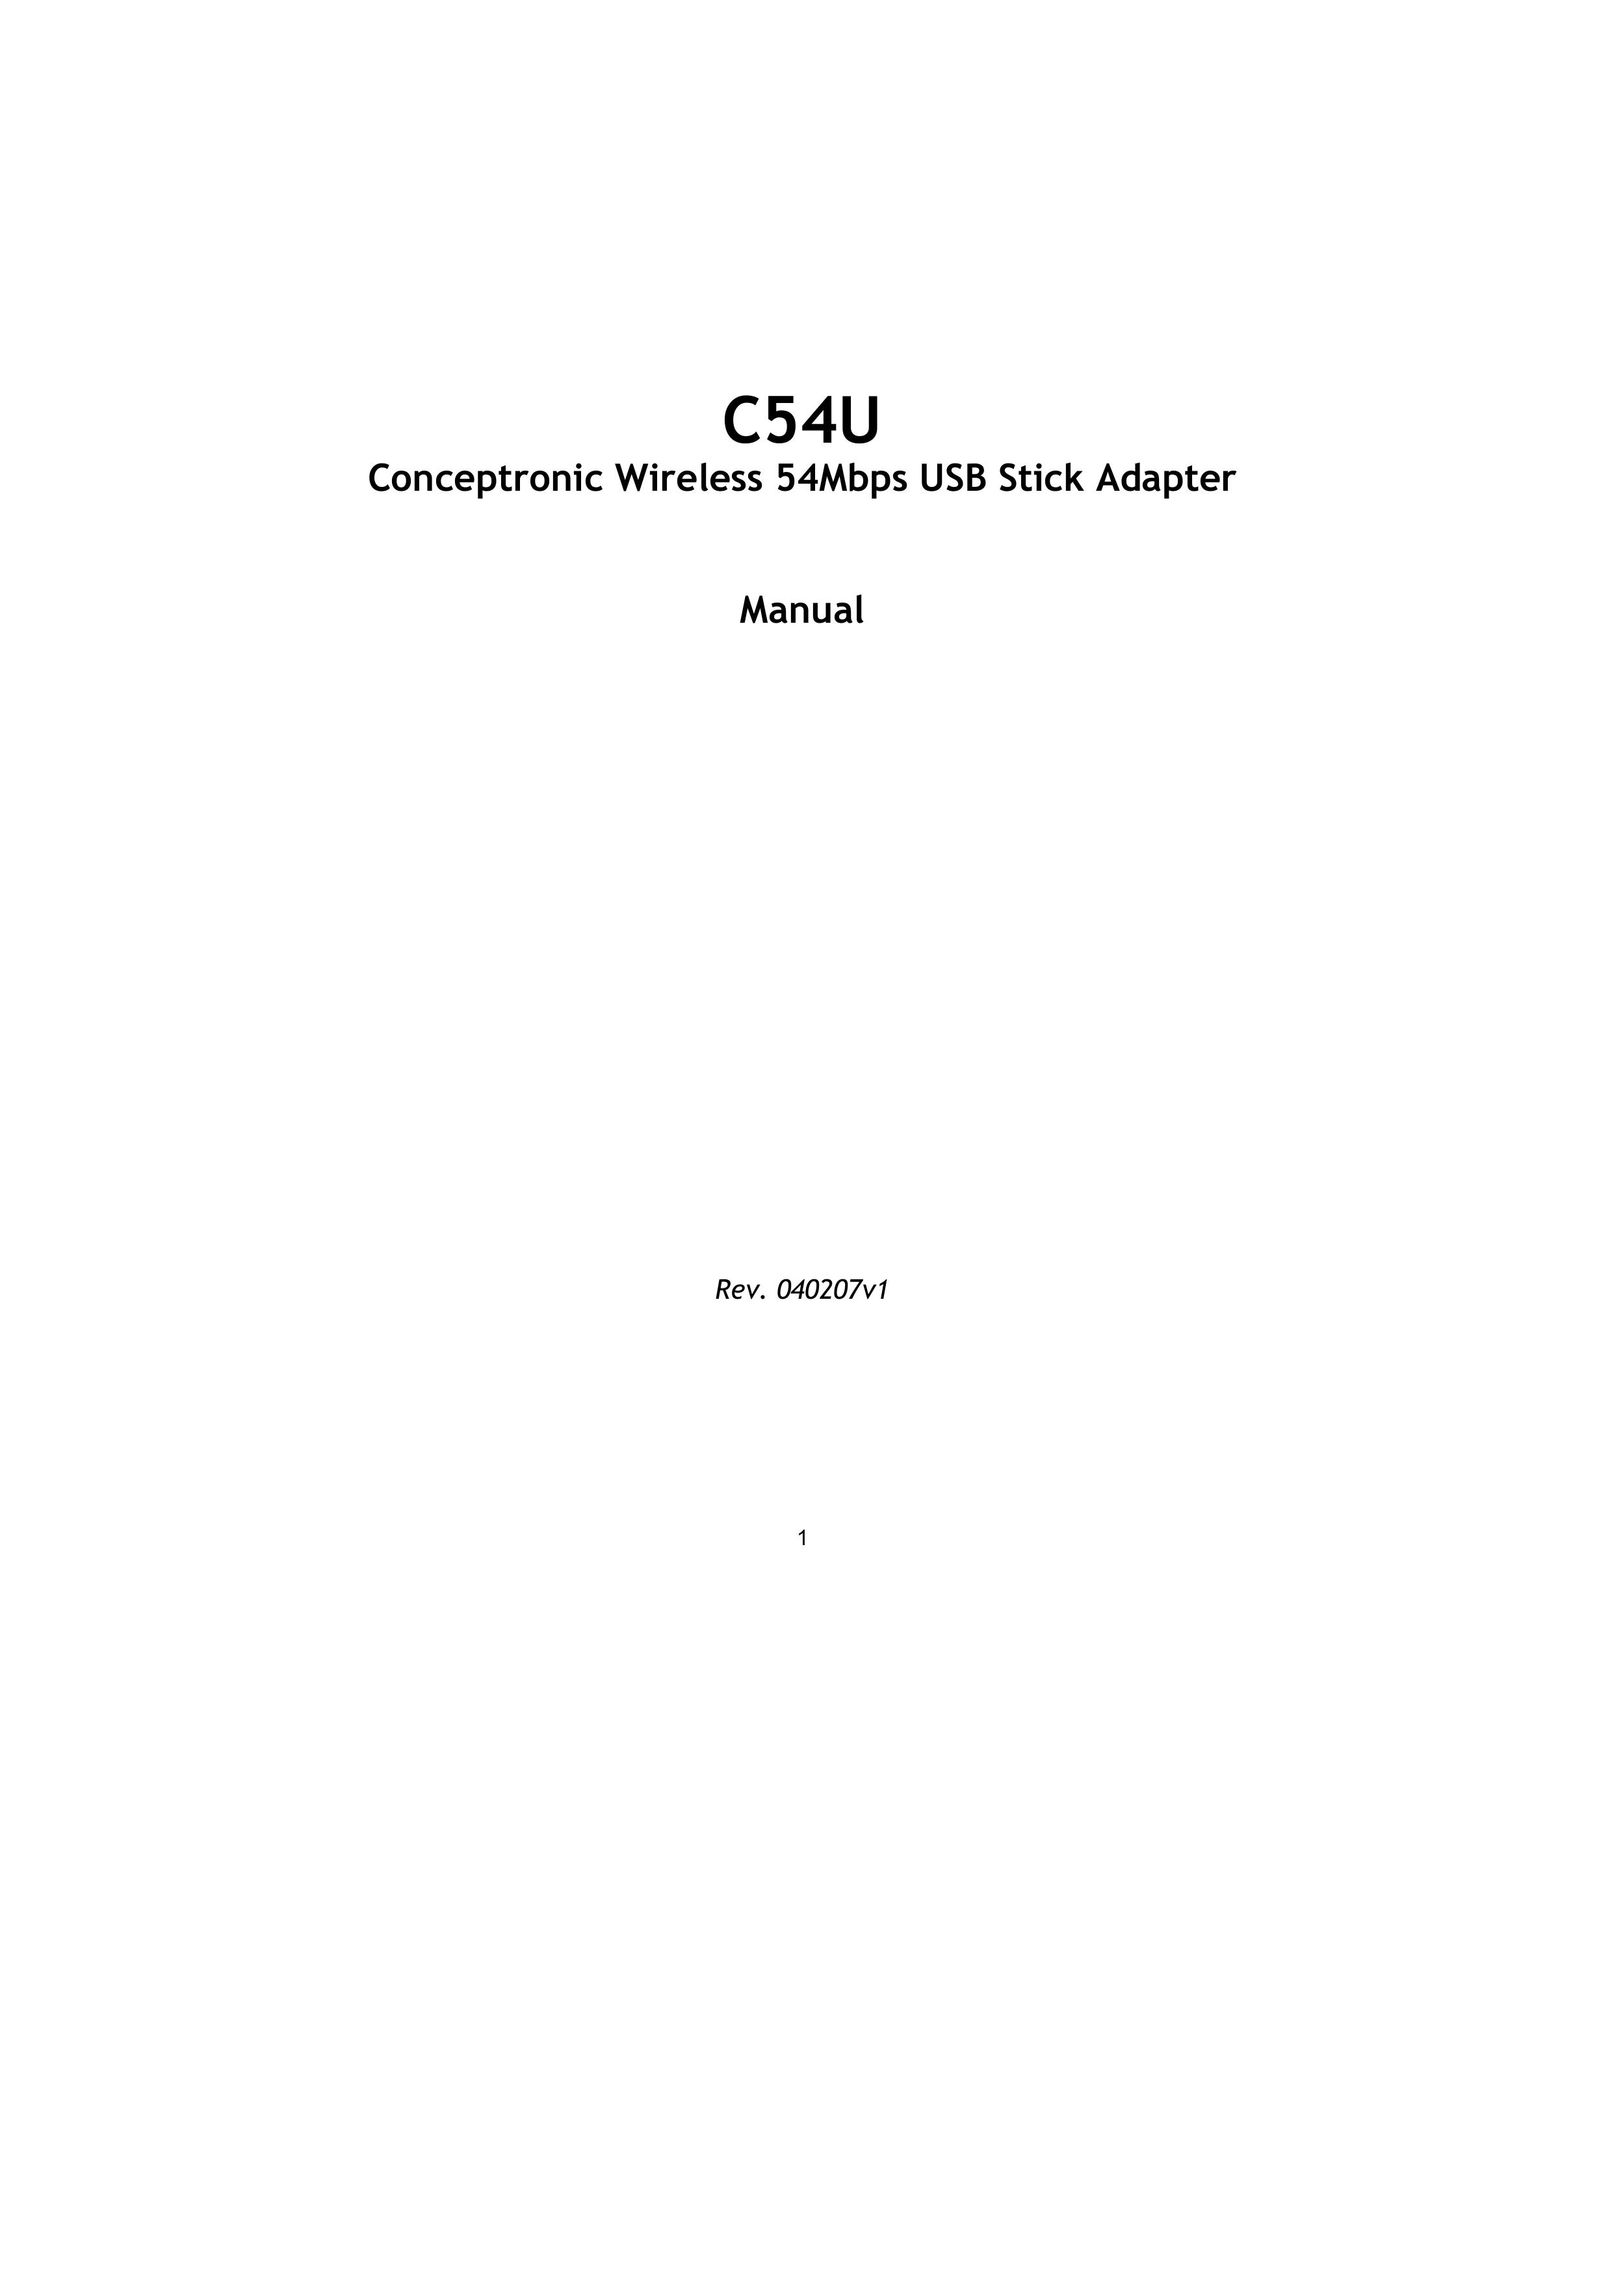 Conceptronic C54U Network Hardware User Manual